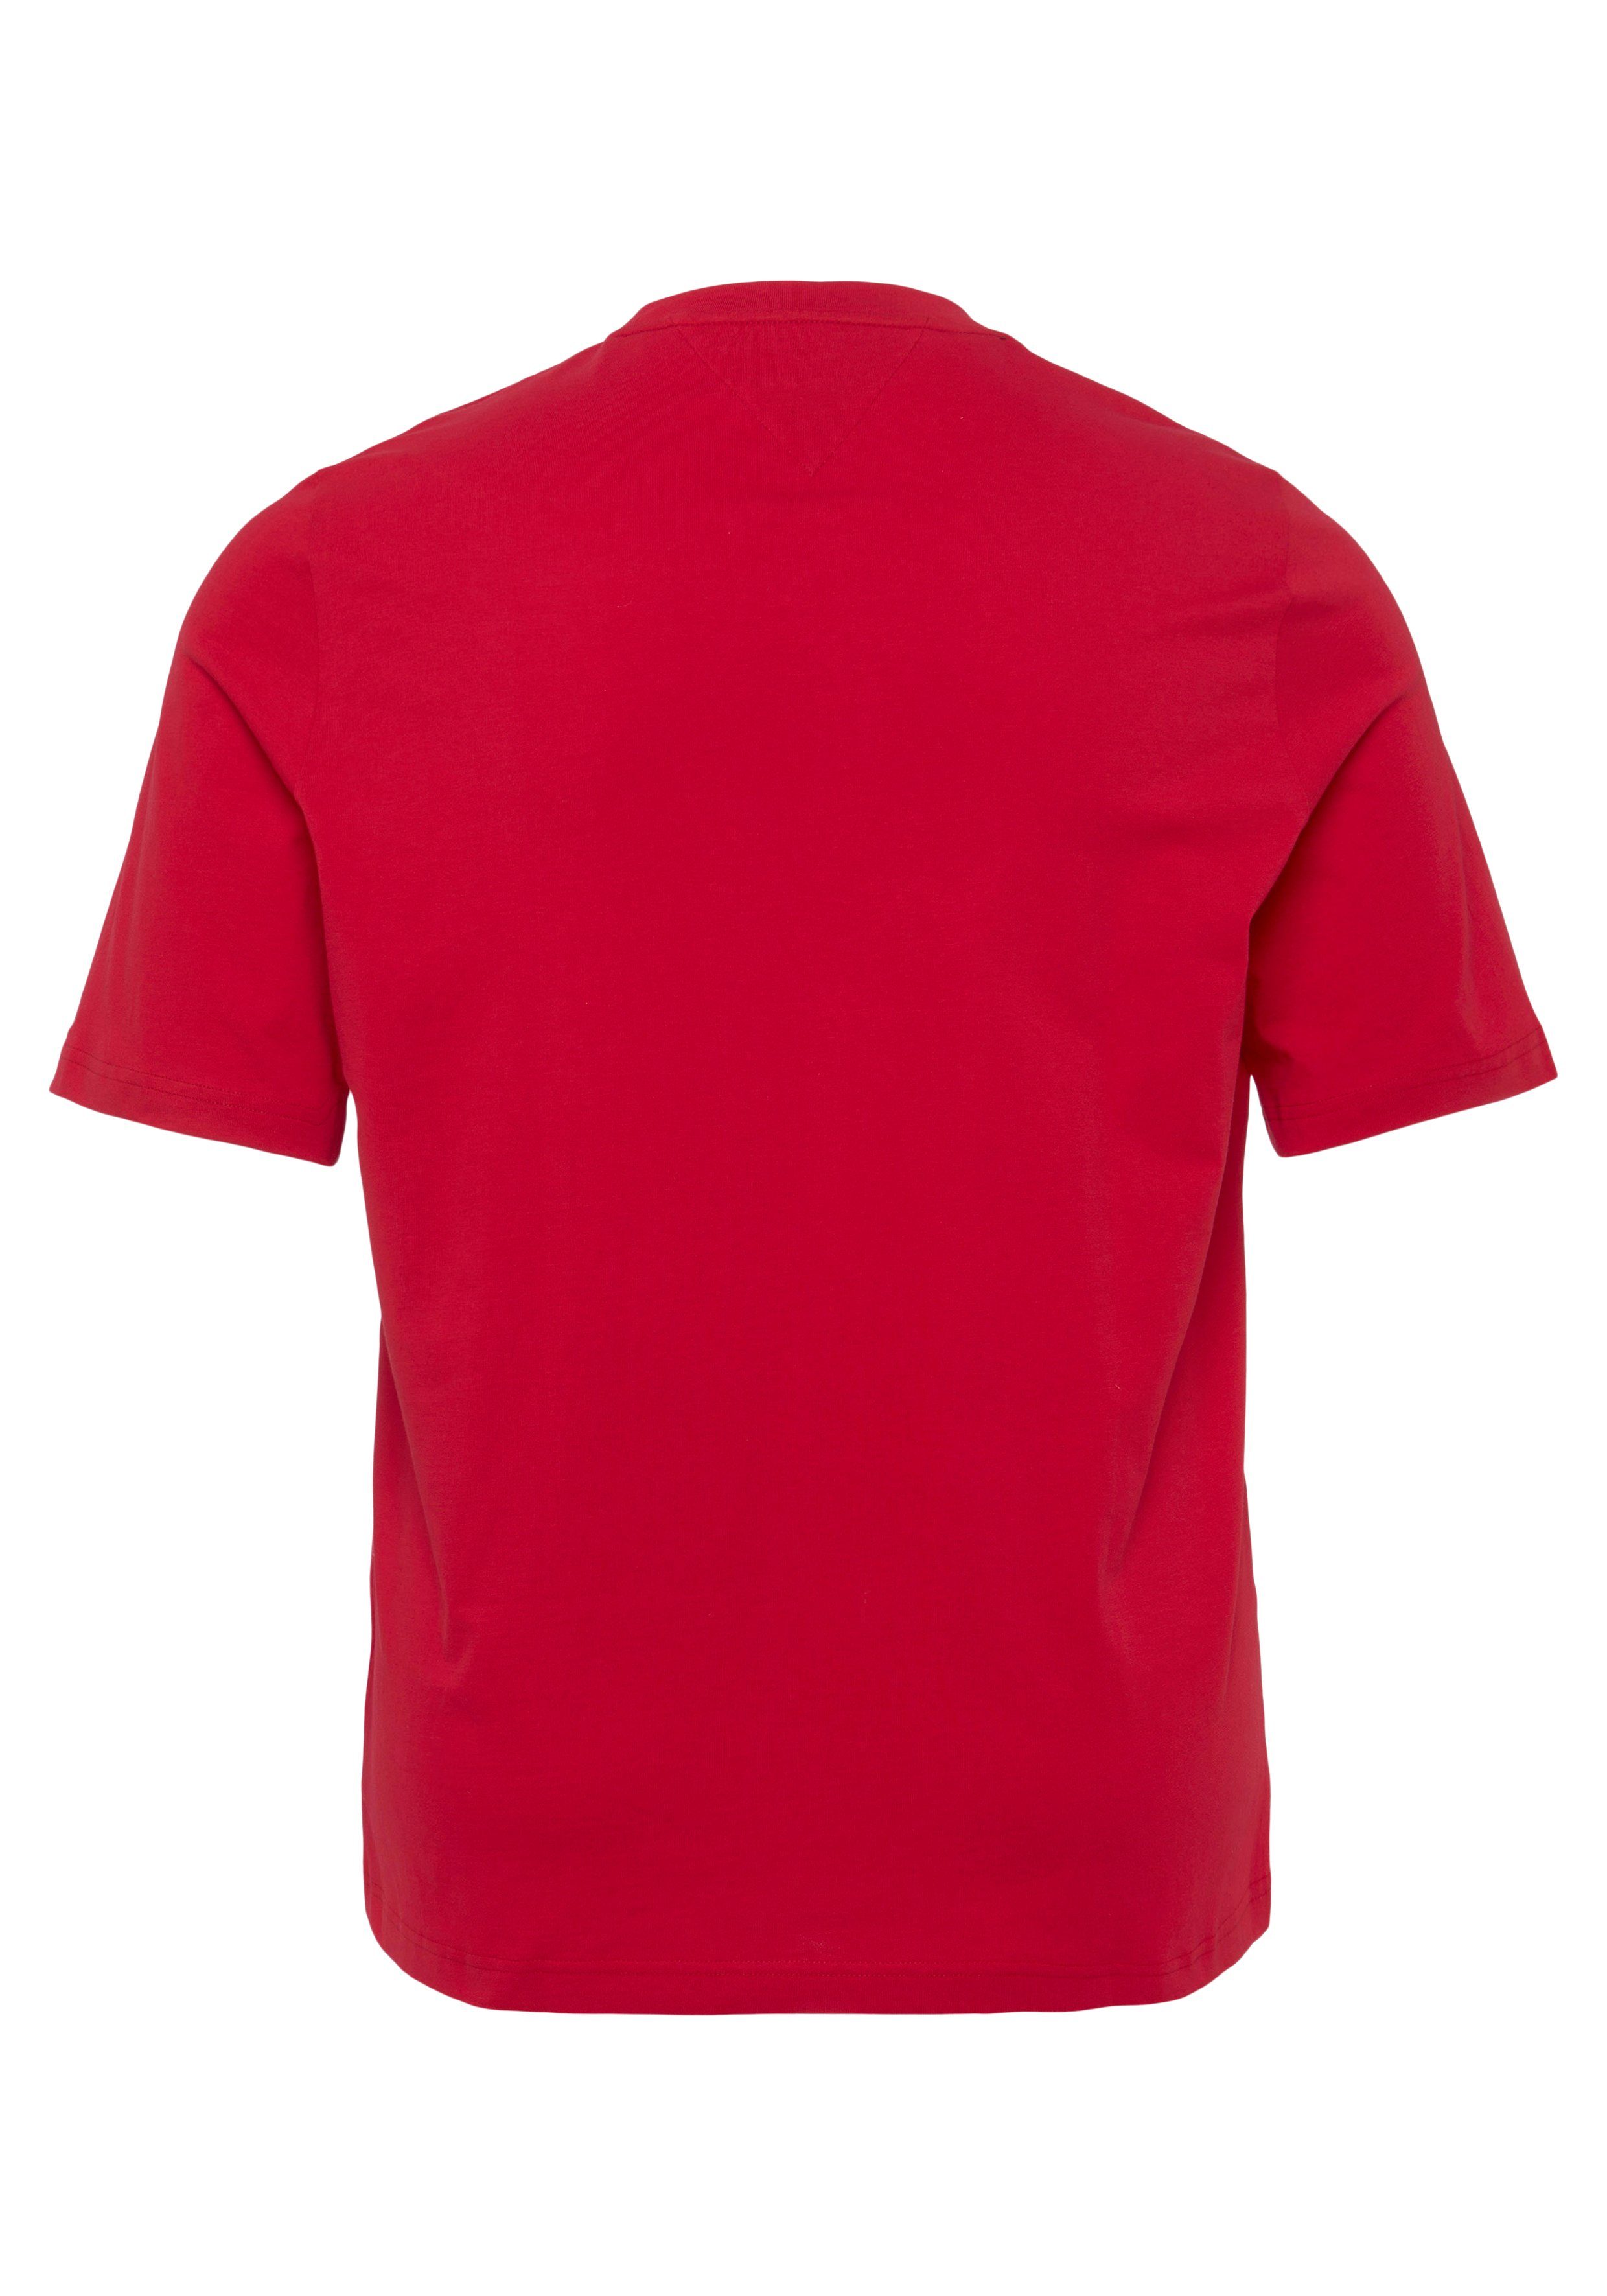 Logoschriftzug Tommy Hilfiger mit Tommy auf Brust Tall LOGO Hilfiger der BT-TOMMY TEE-B rot Big T-Shirt &